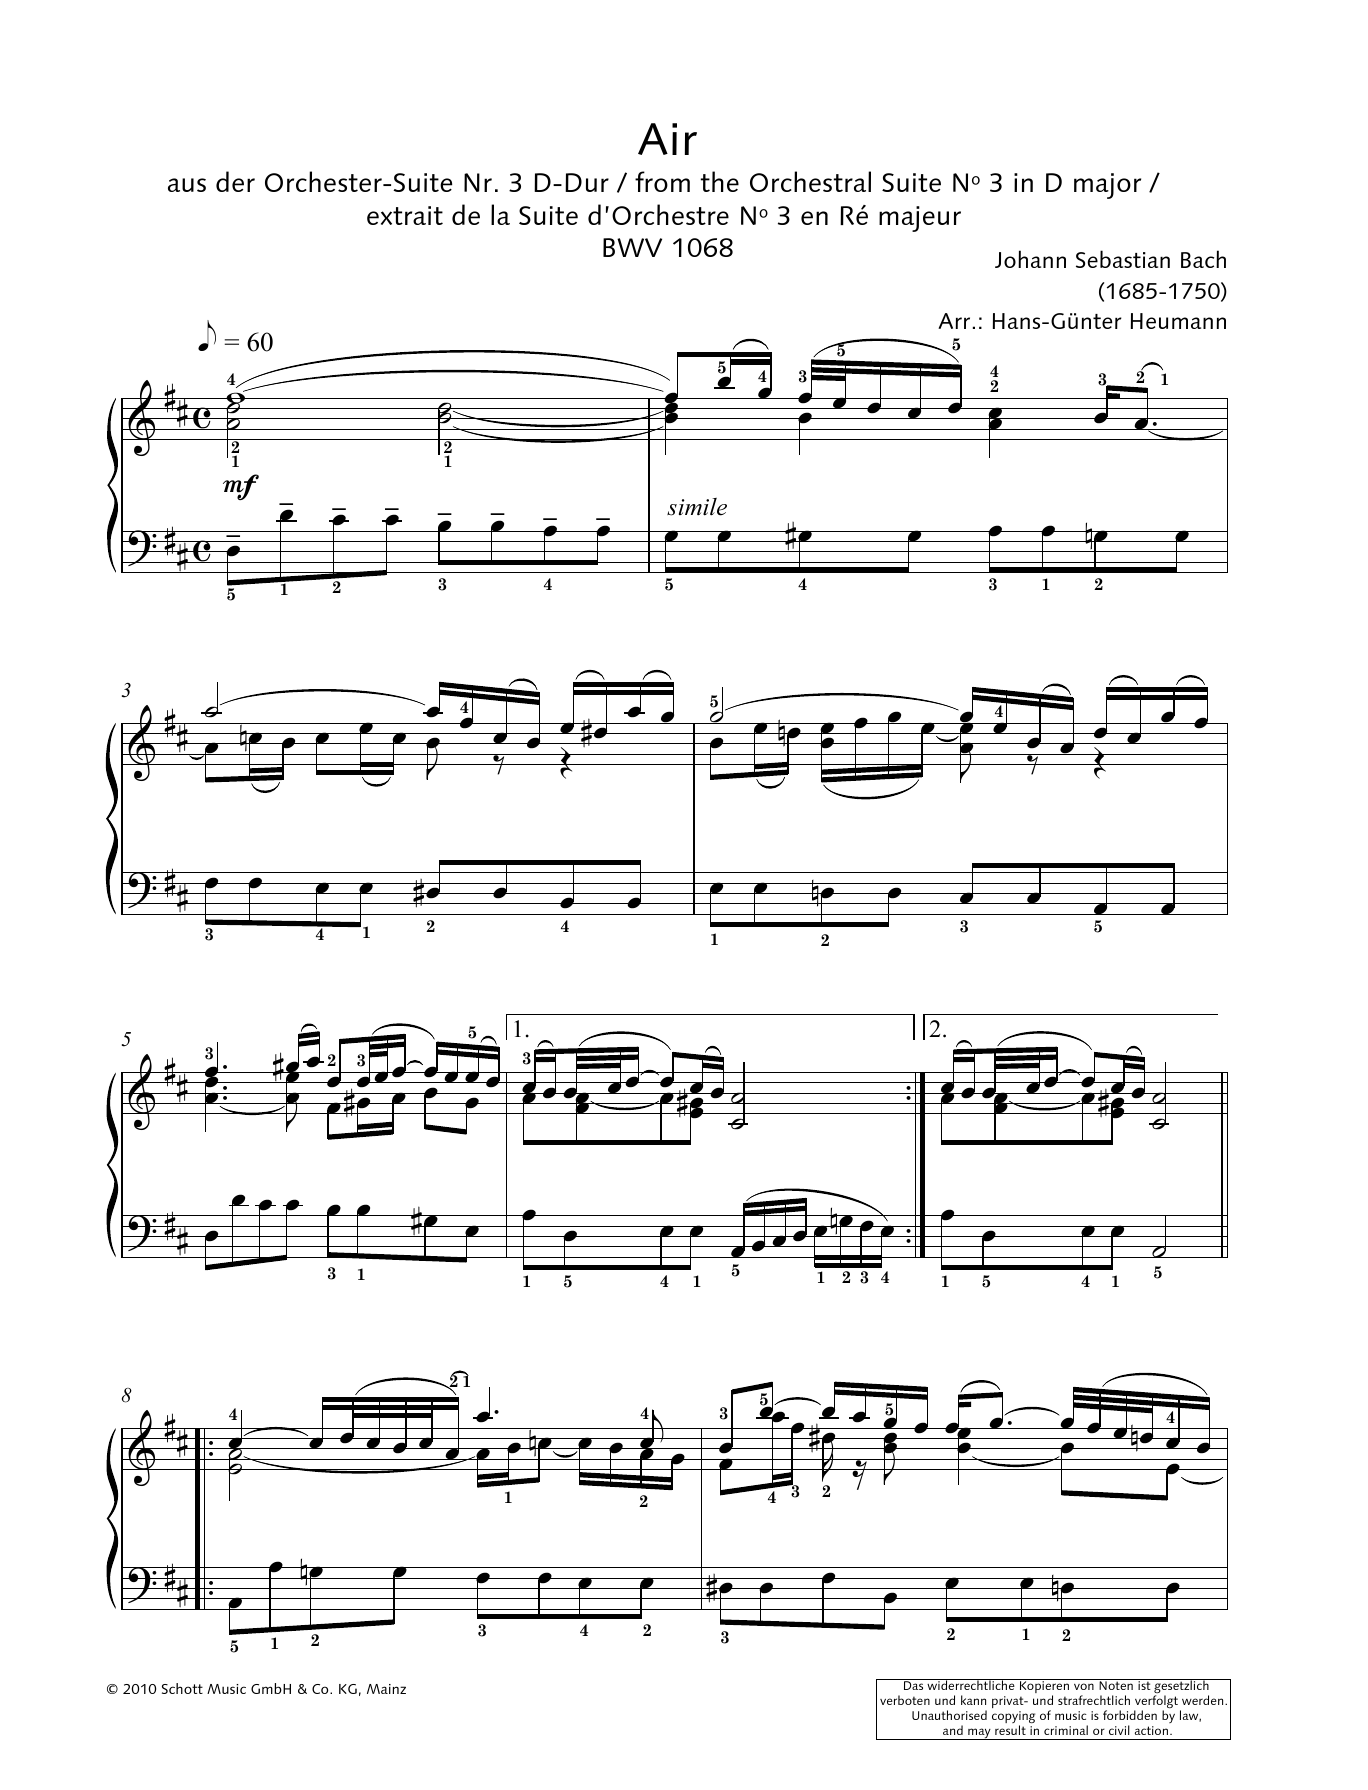 Johann Sebastian Bach Air Sheet Music Notes & Chords for Easy Piano - Download or Print PDF